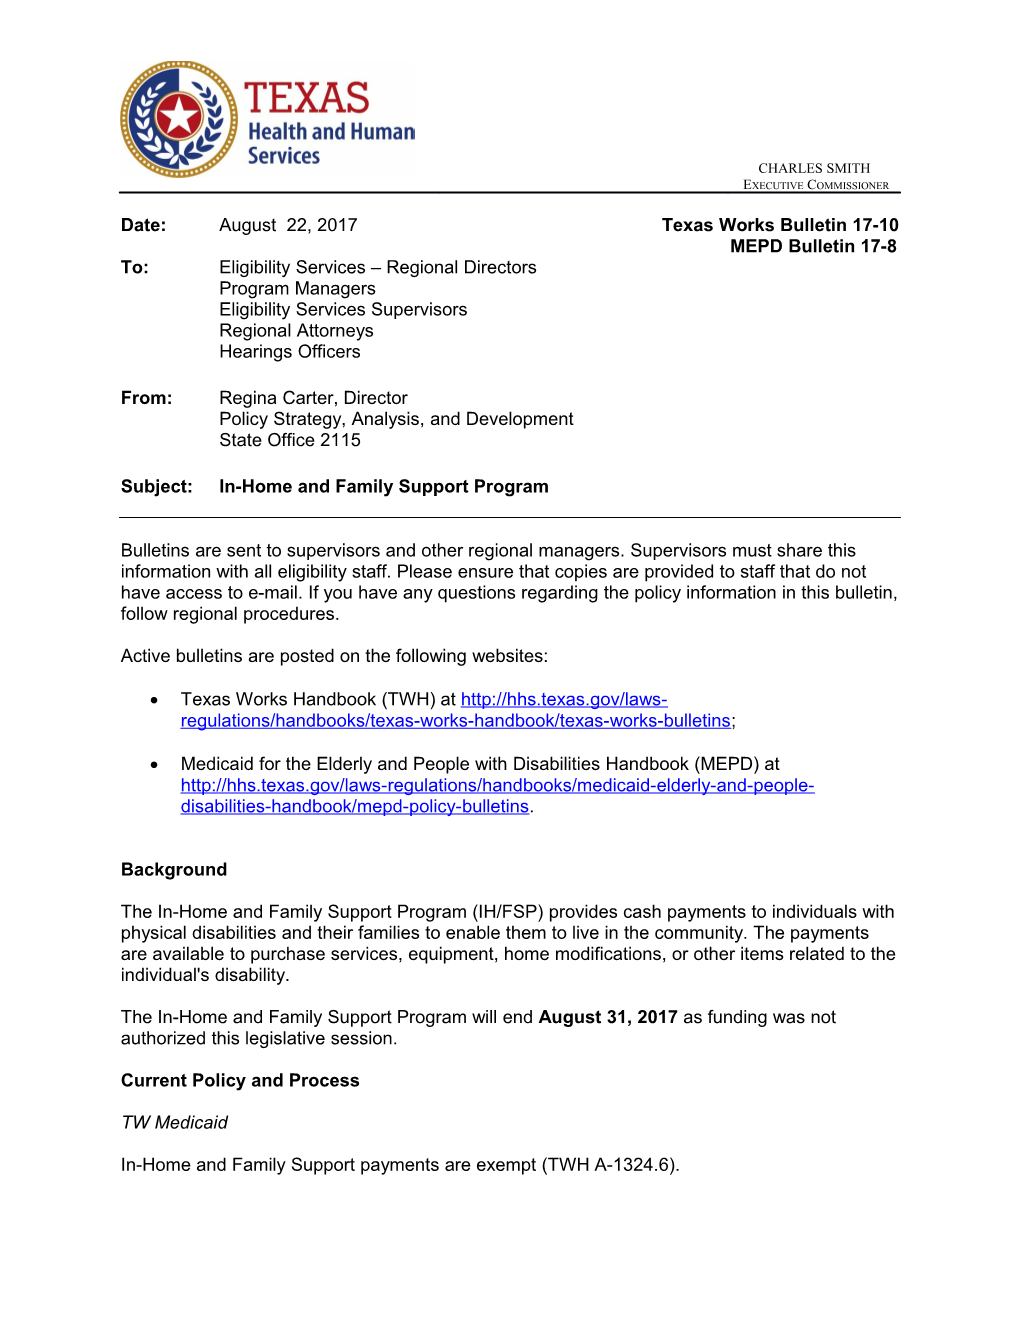 Texas Works Bulletin 17-10 & MEPD Bulletin 17-8